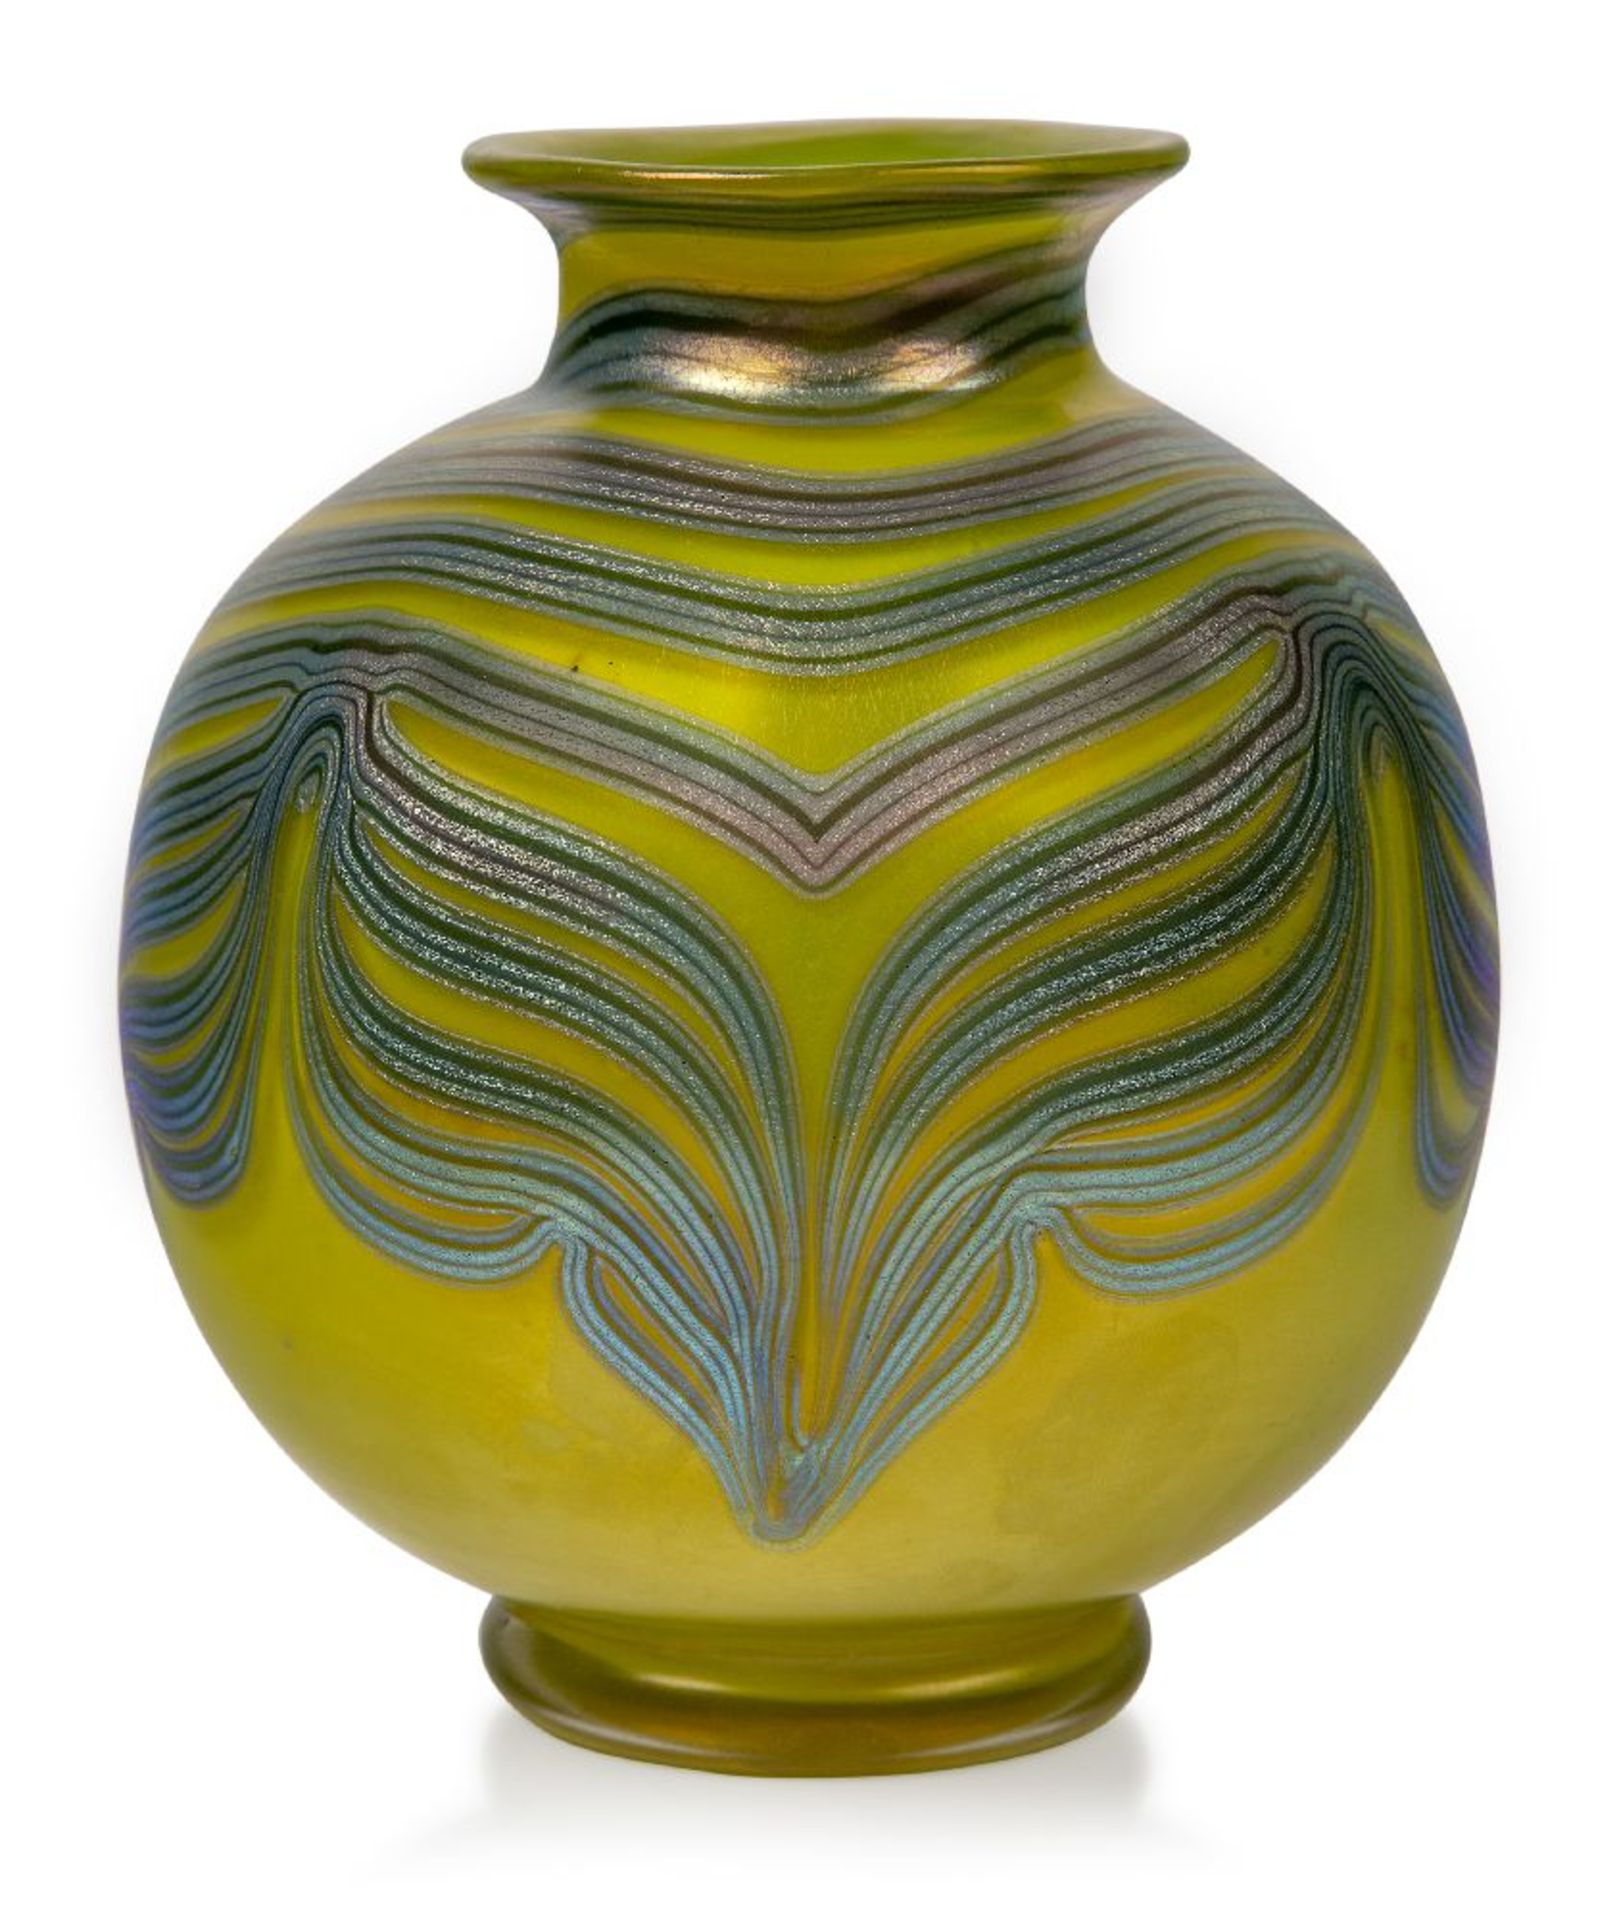 Loetz (Austrian), an iridescent Phaenomen ‘acid-yellow’ glass vase, c.1905, PG 829, ground out